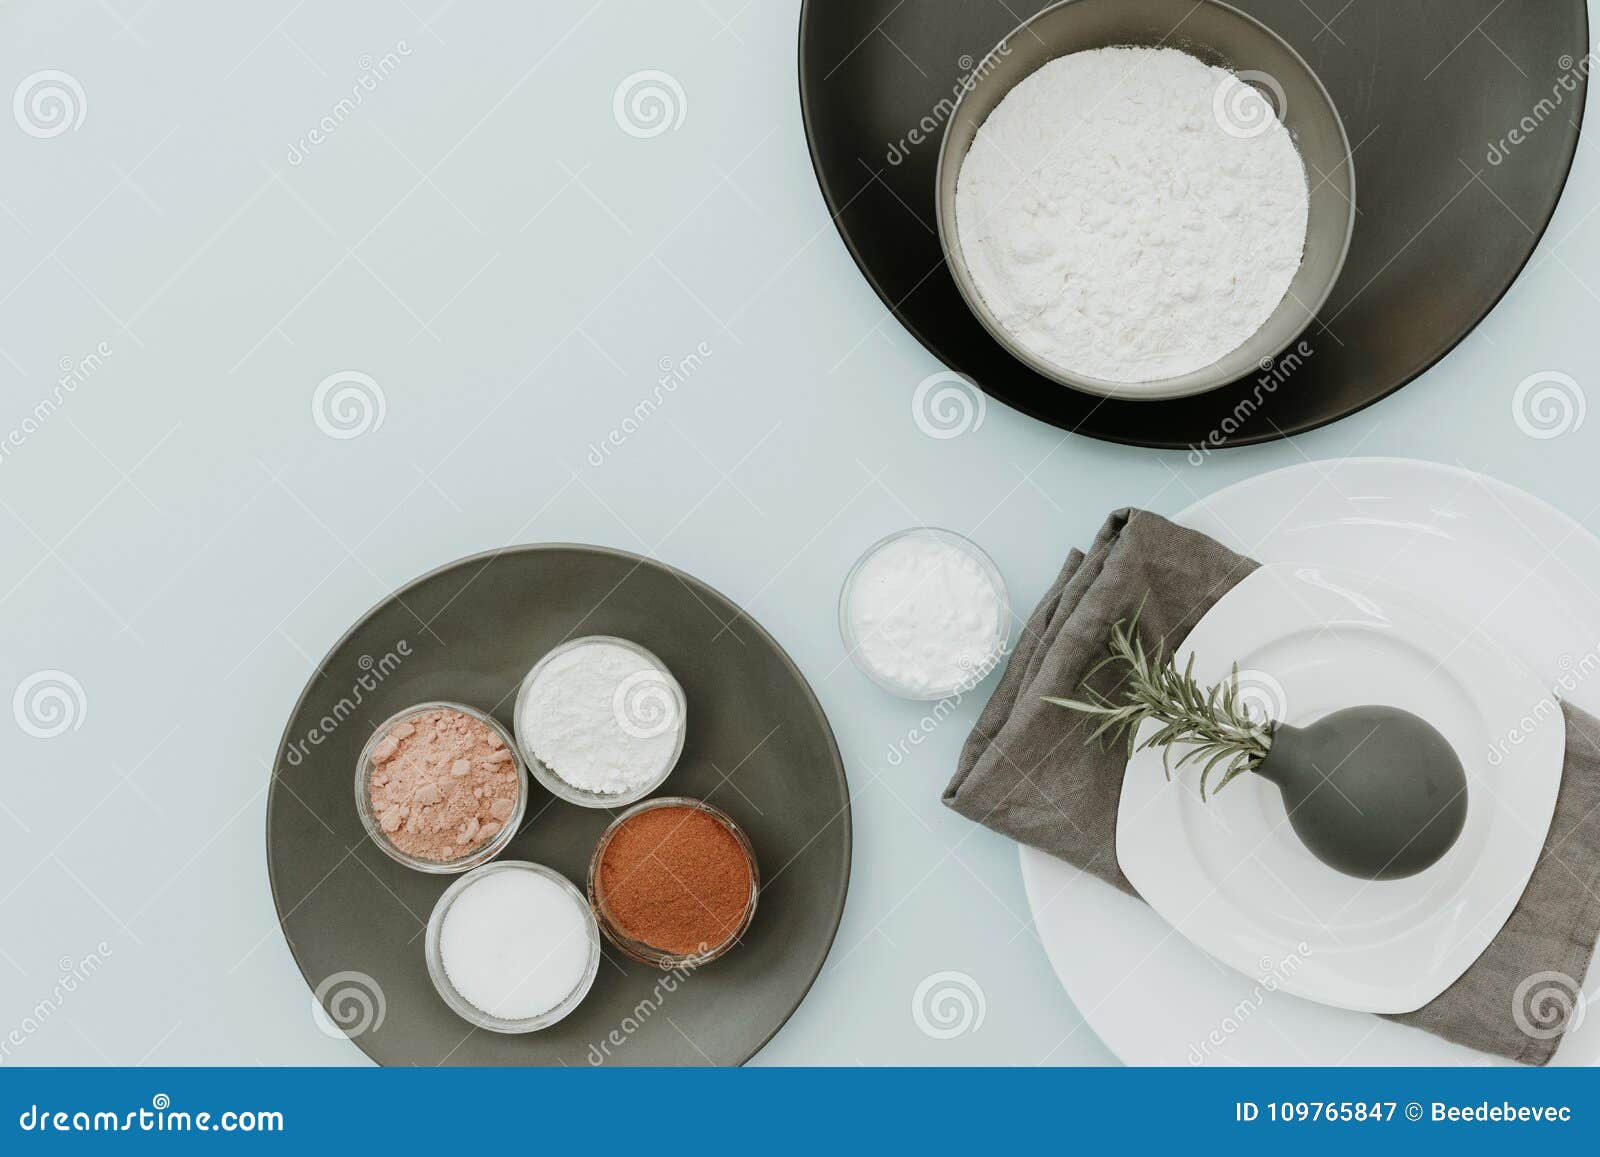 ceramic tableware with baking ingredientes. top view on pastel background mock up.